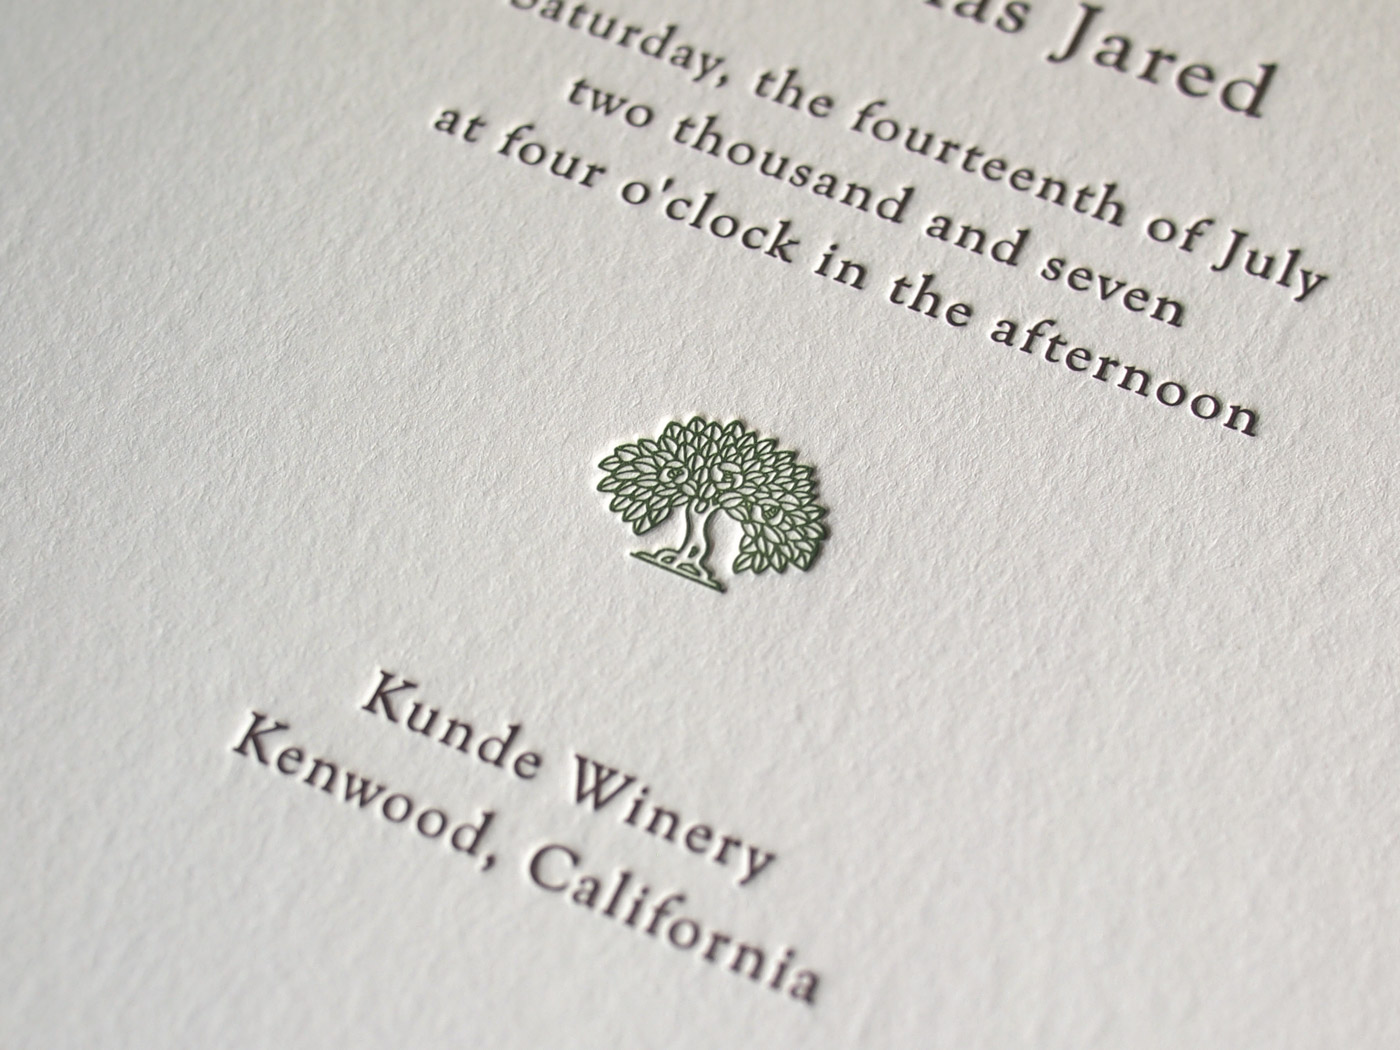 Californian invitation from Parklife Press